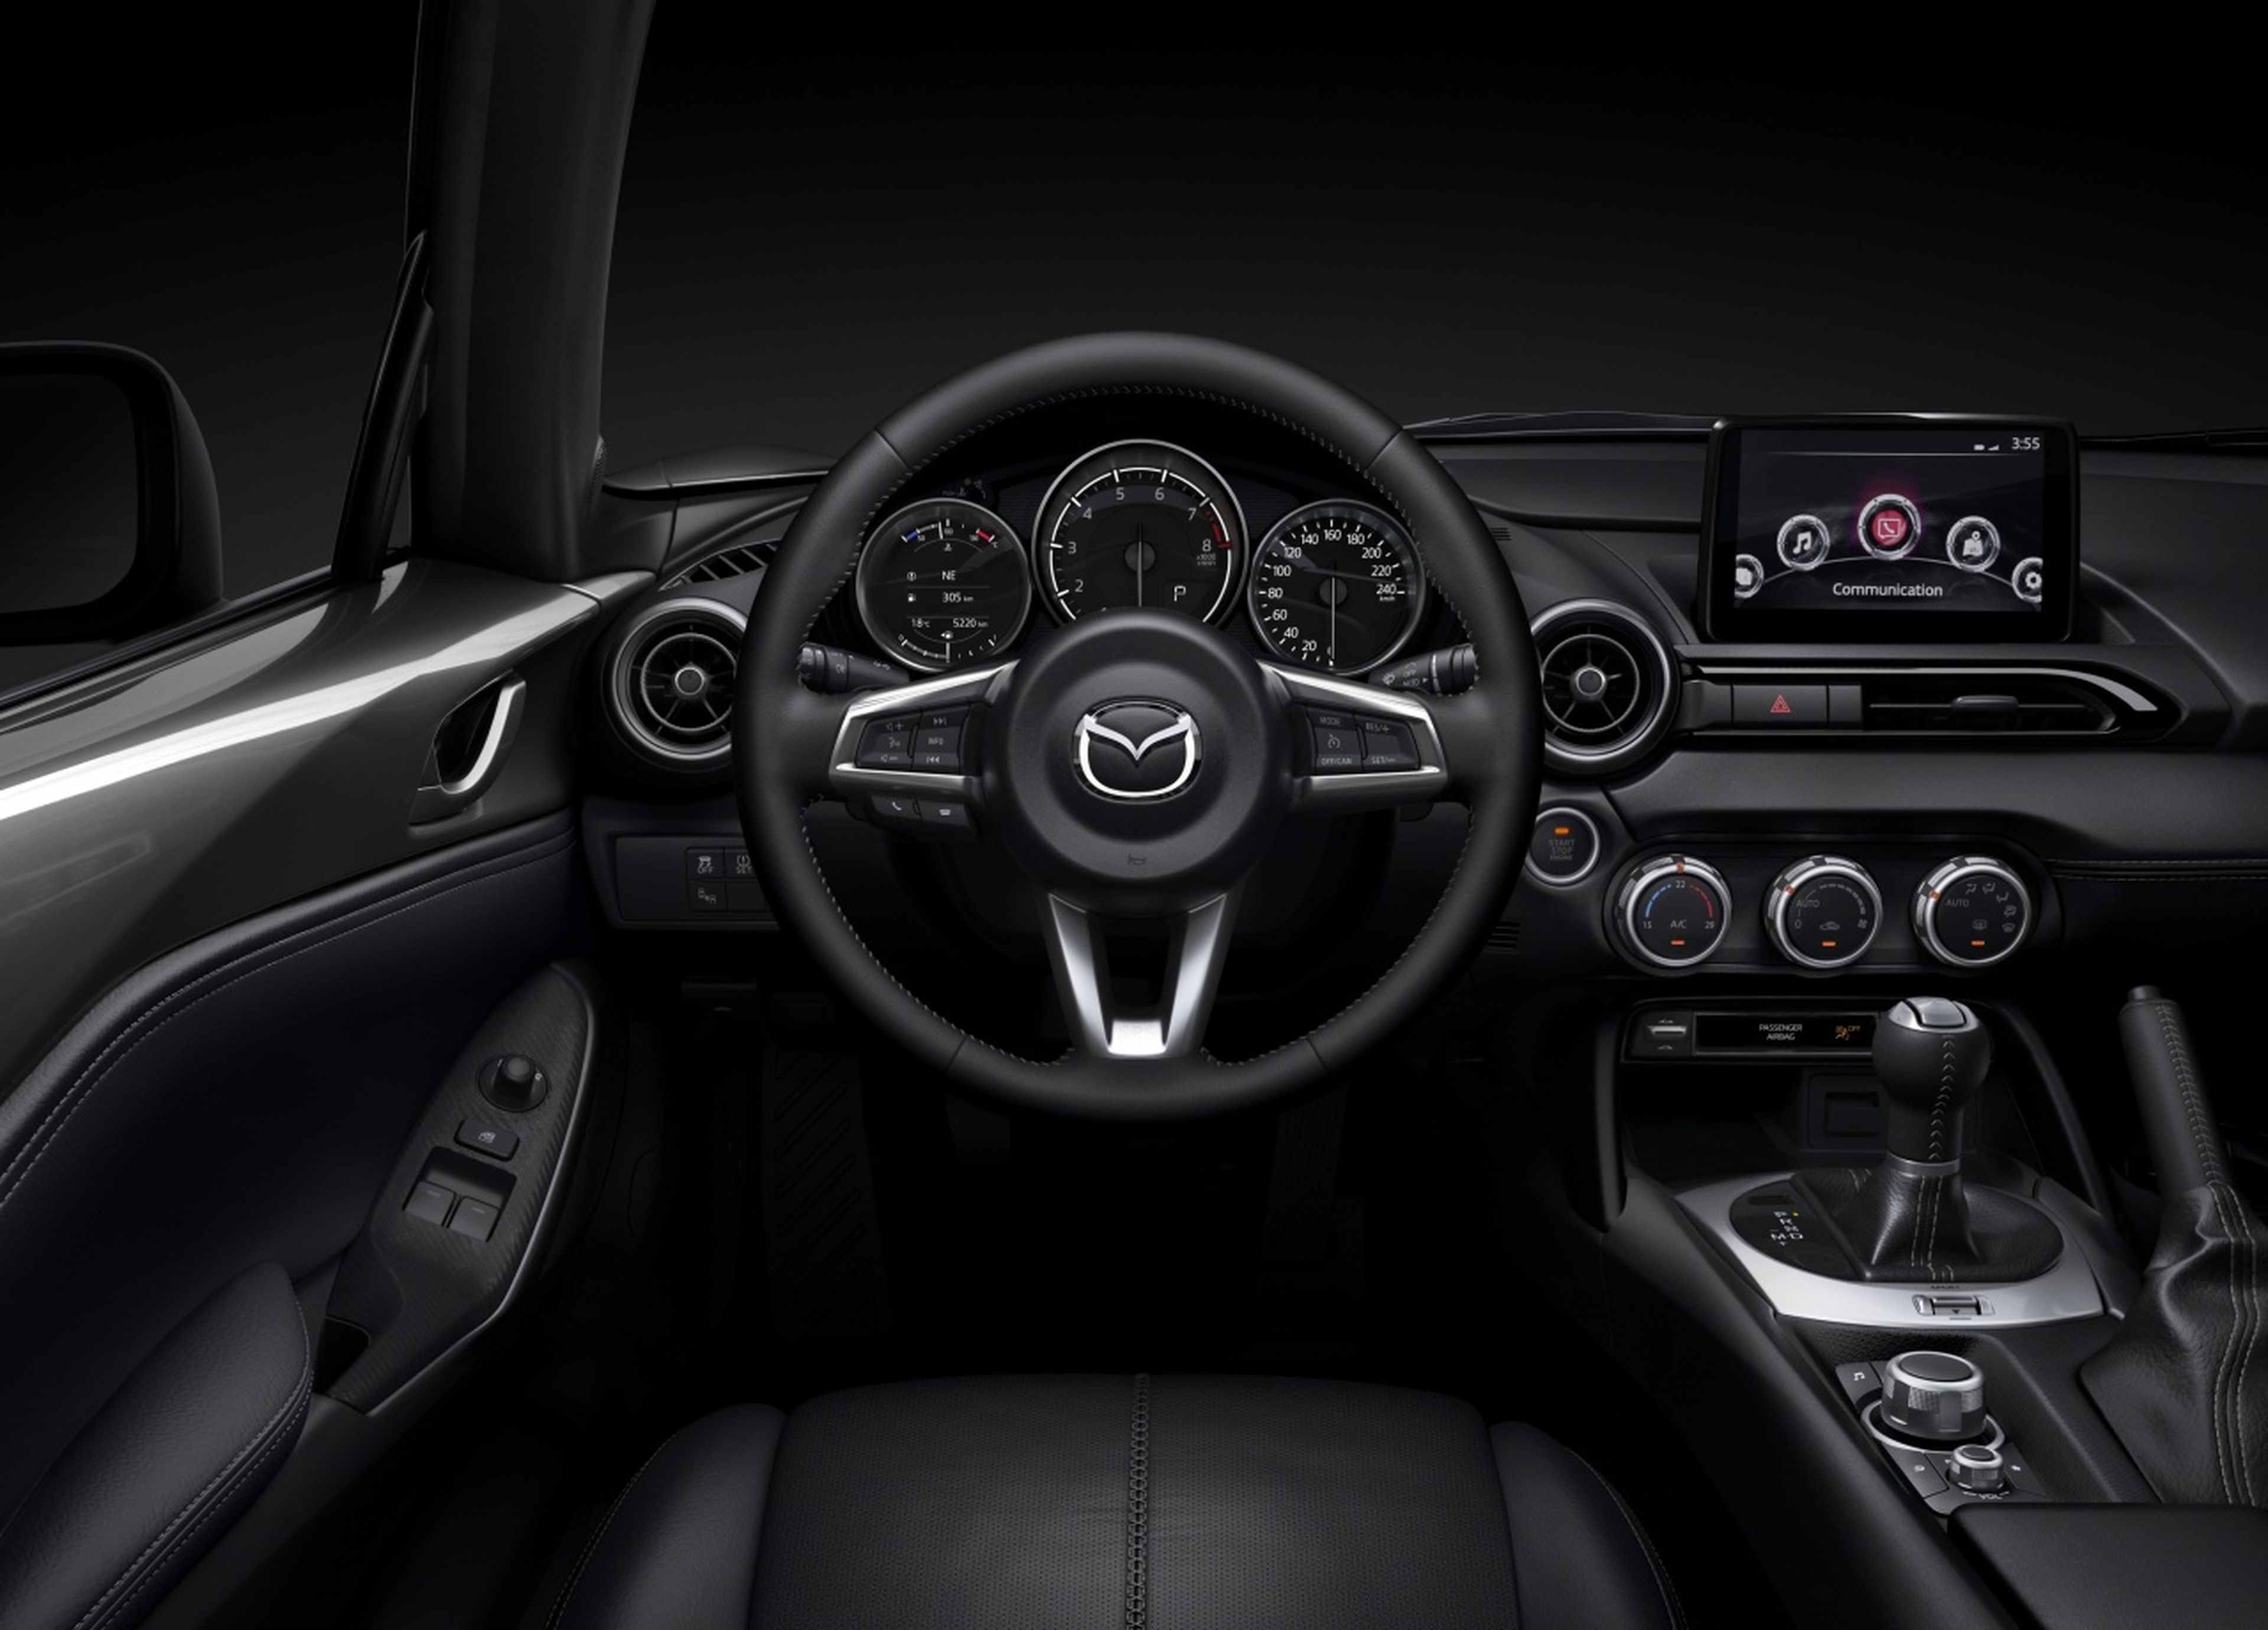 Mazda MX-5 interior